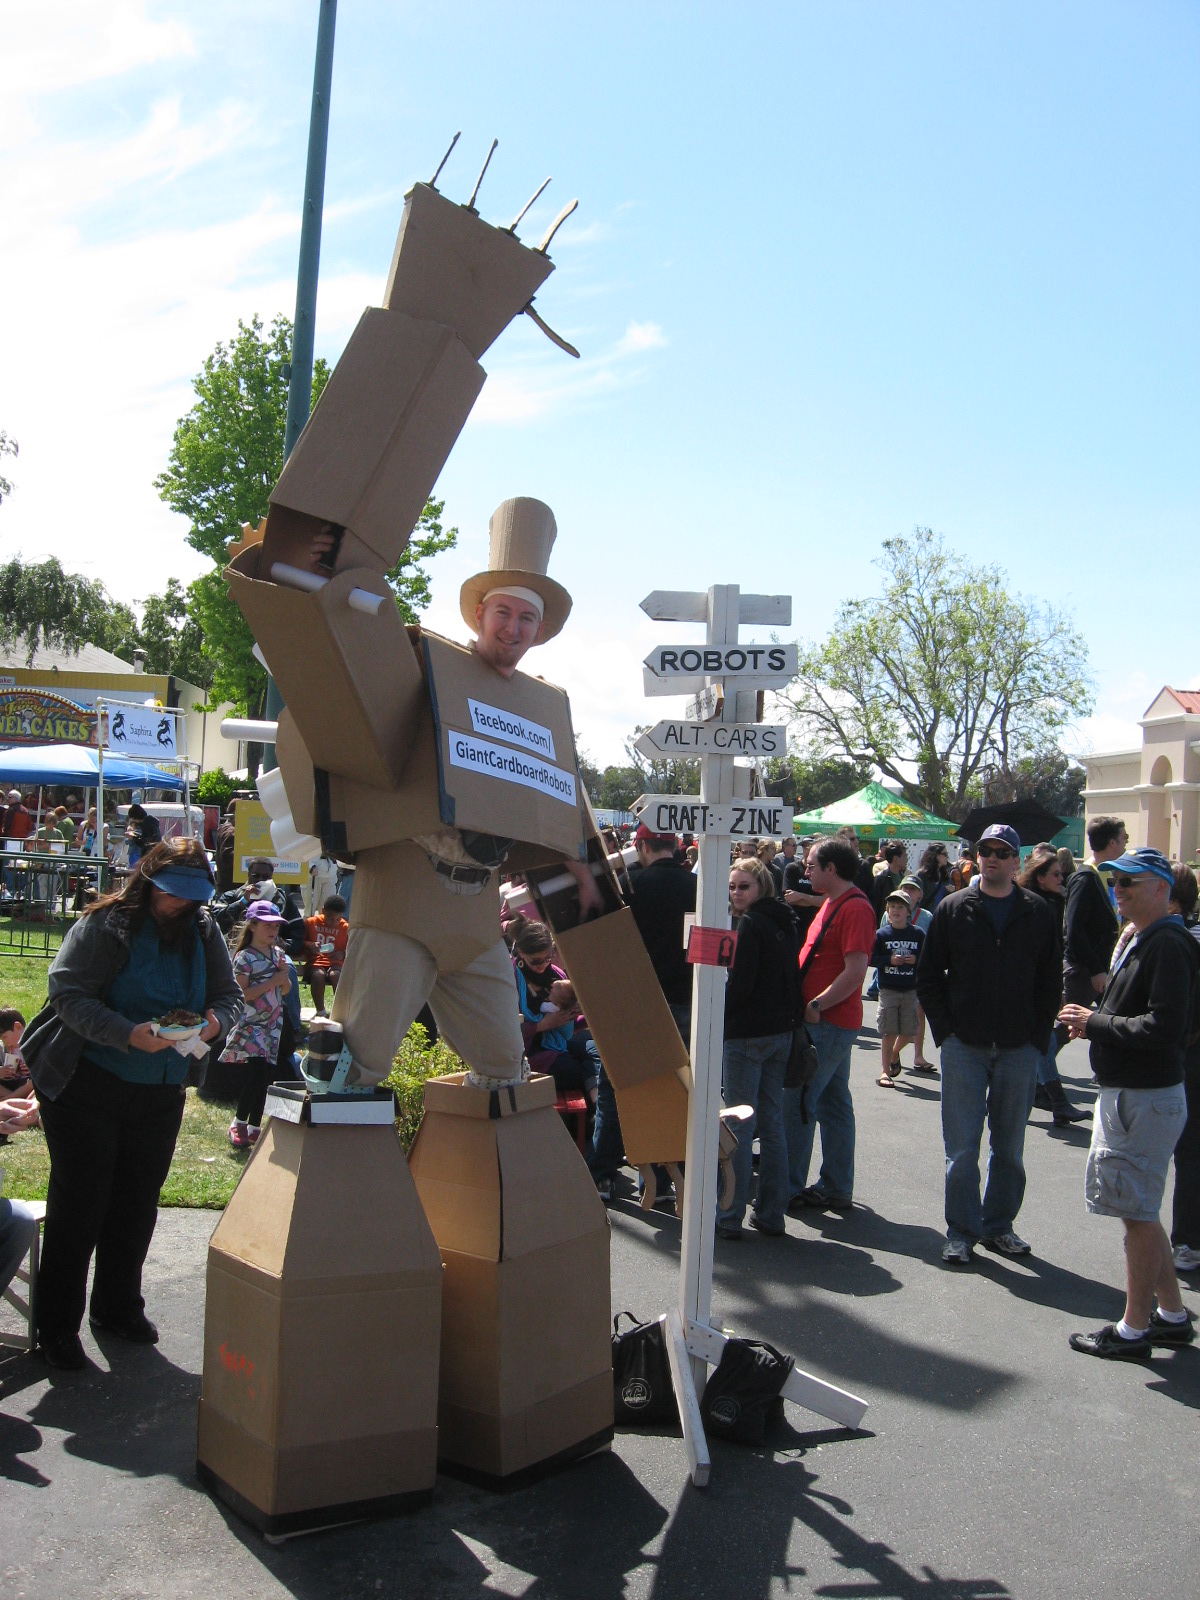 Giant Cardboard Robots